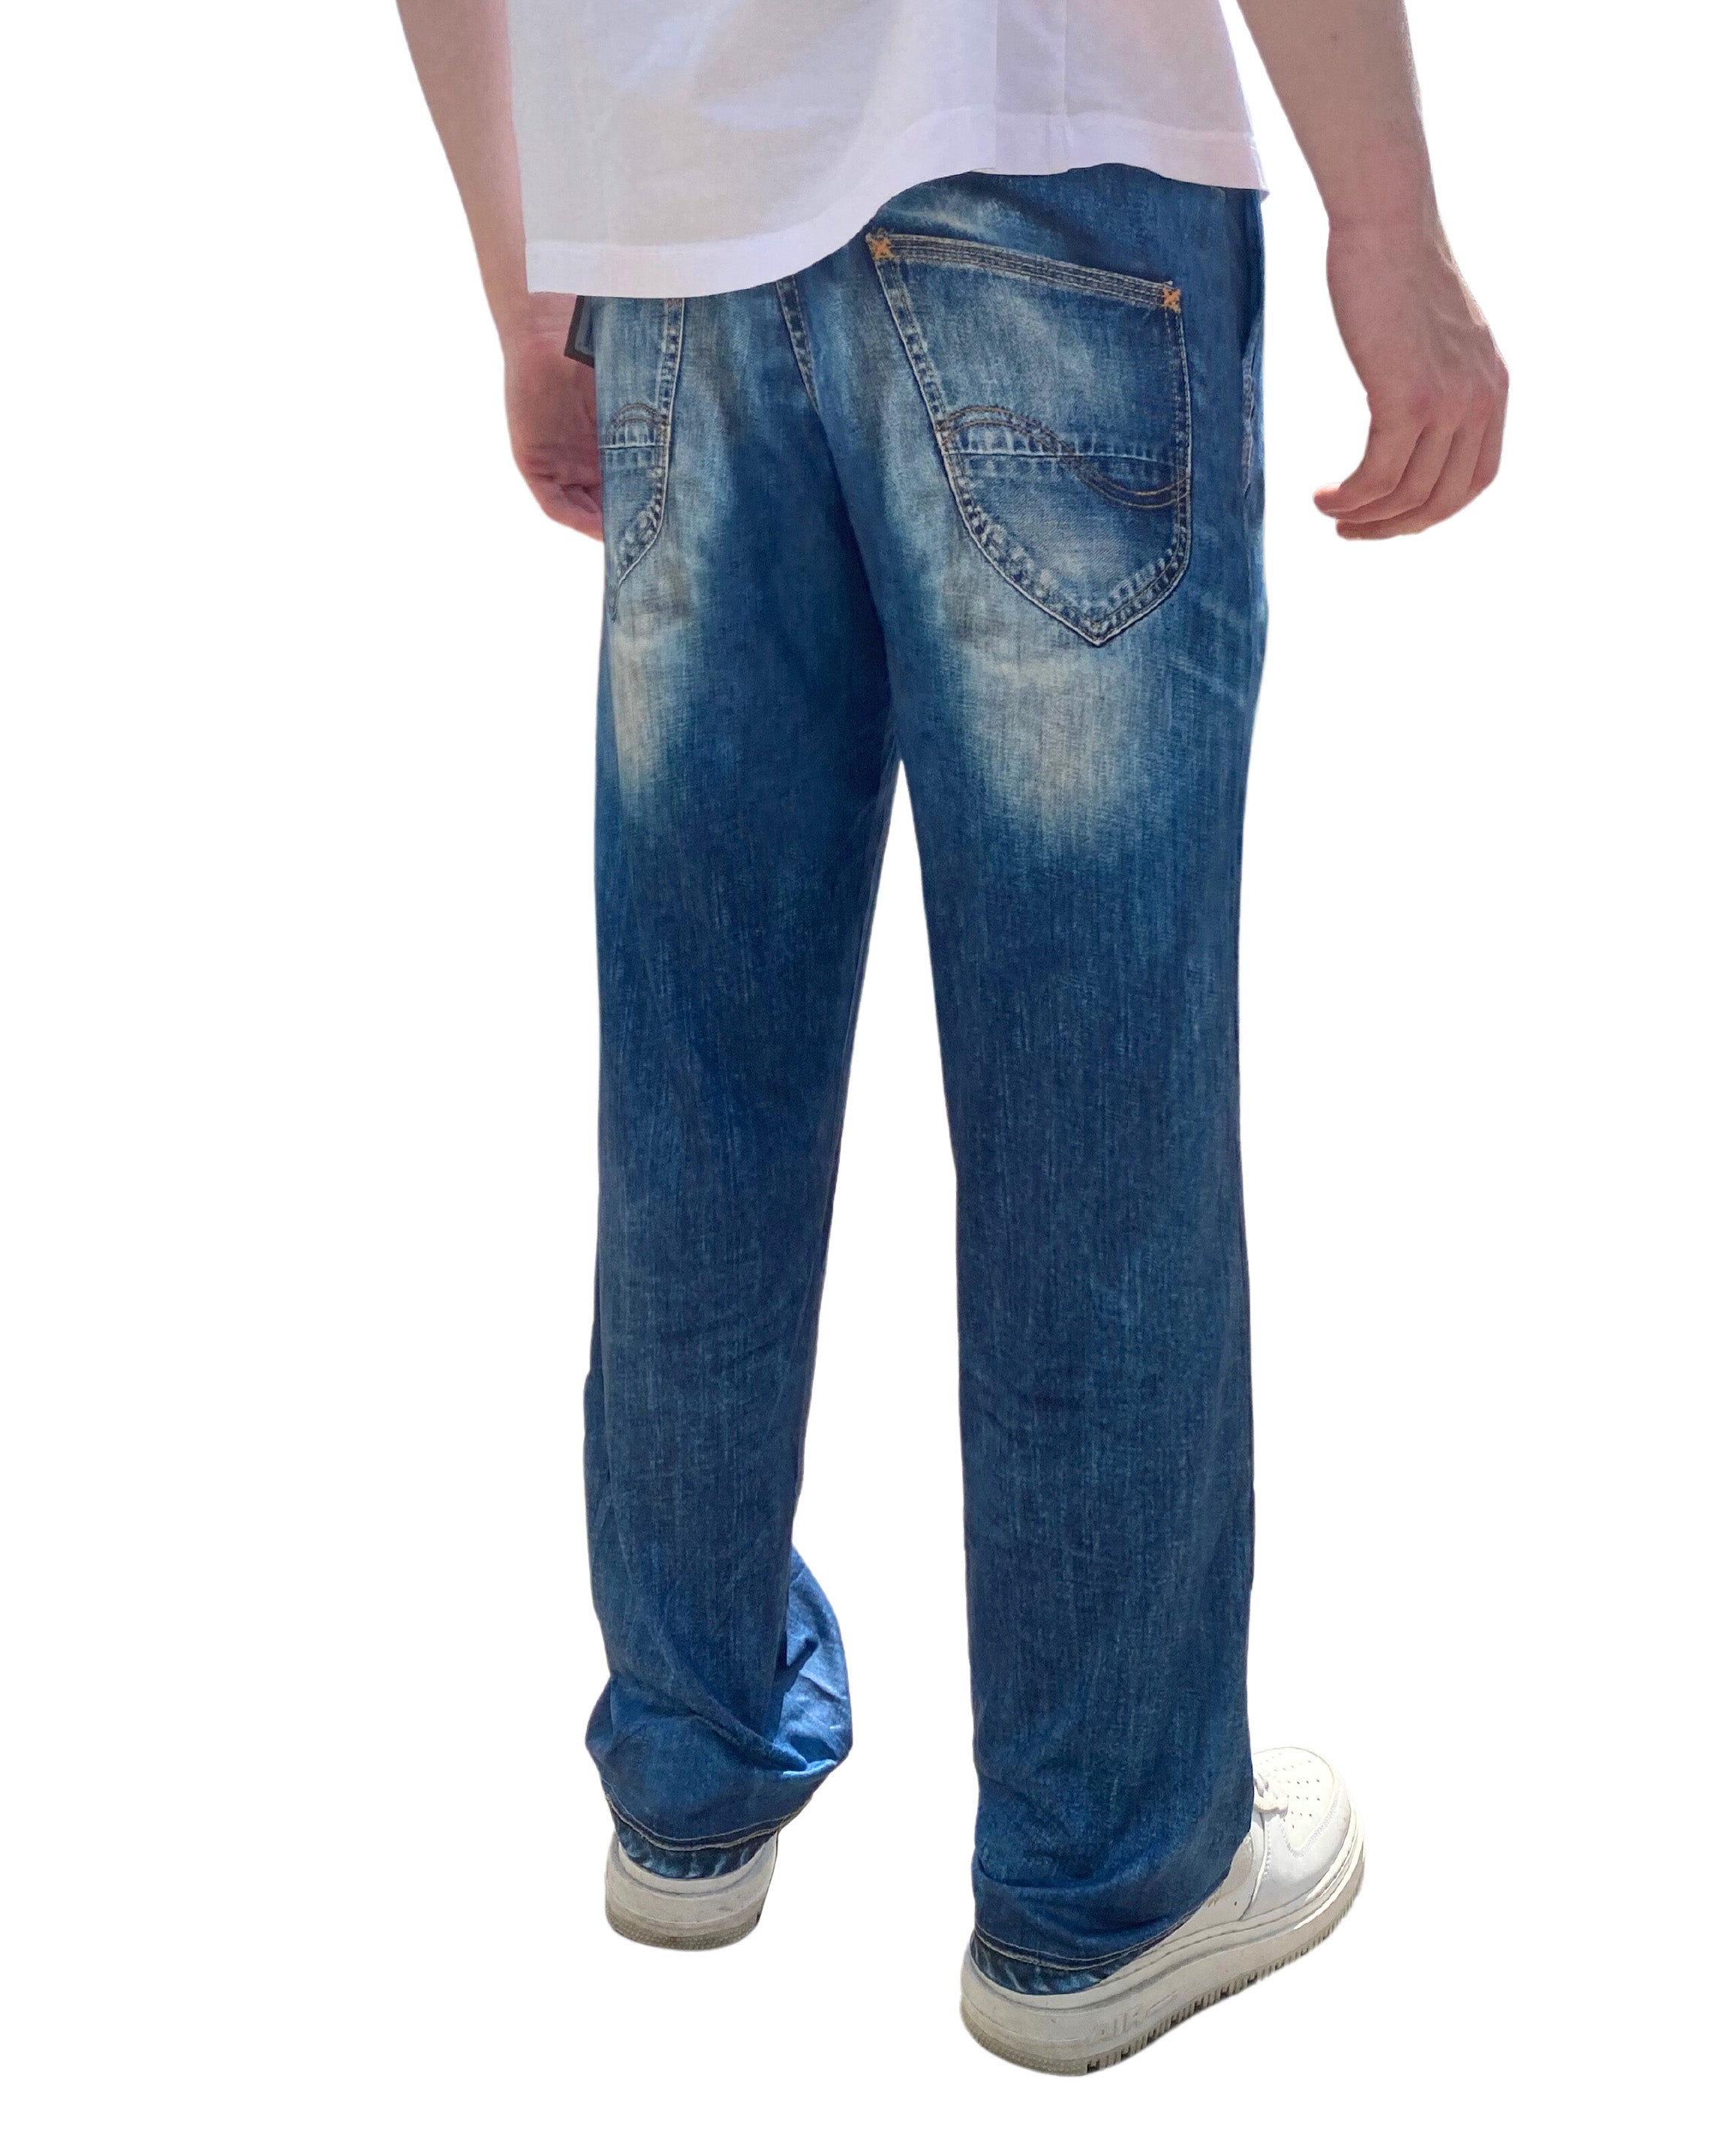  Blue Jeans Pajama Lounge Pants back side view on model (waist down)